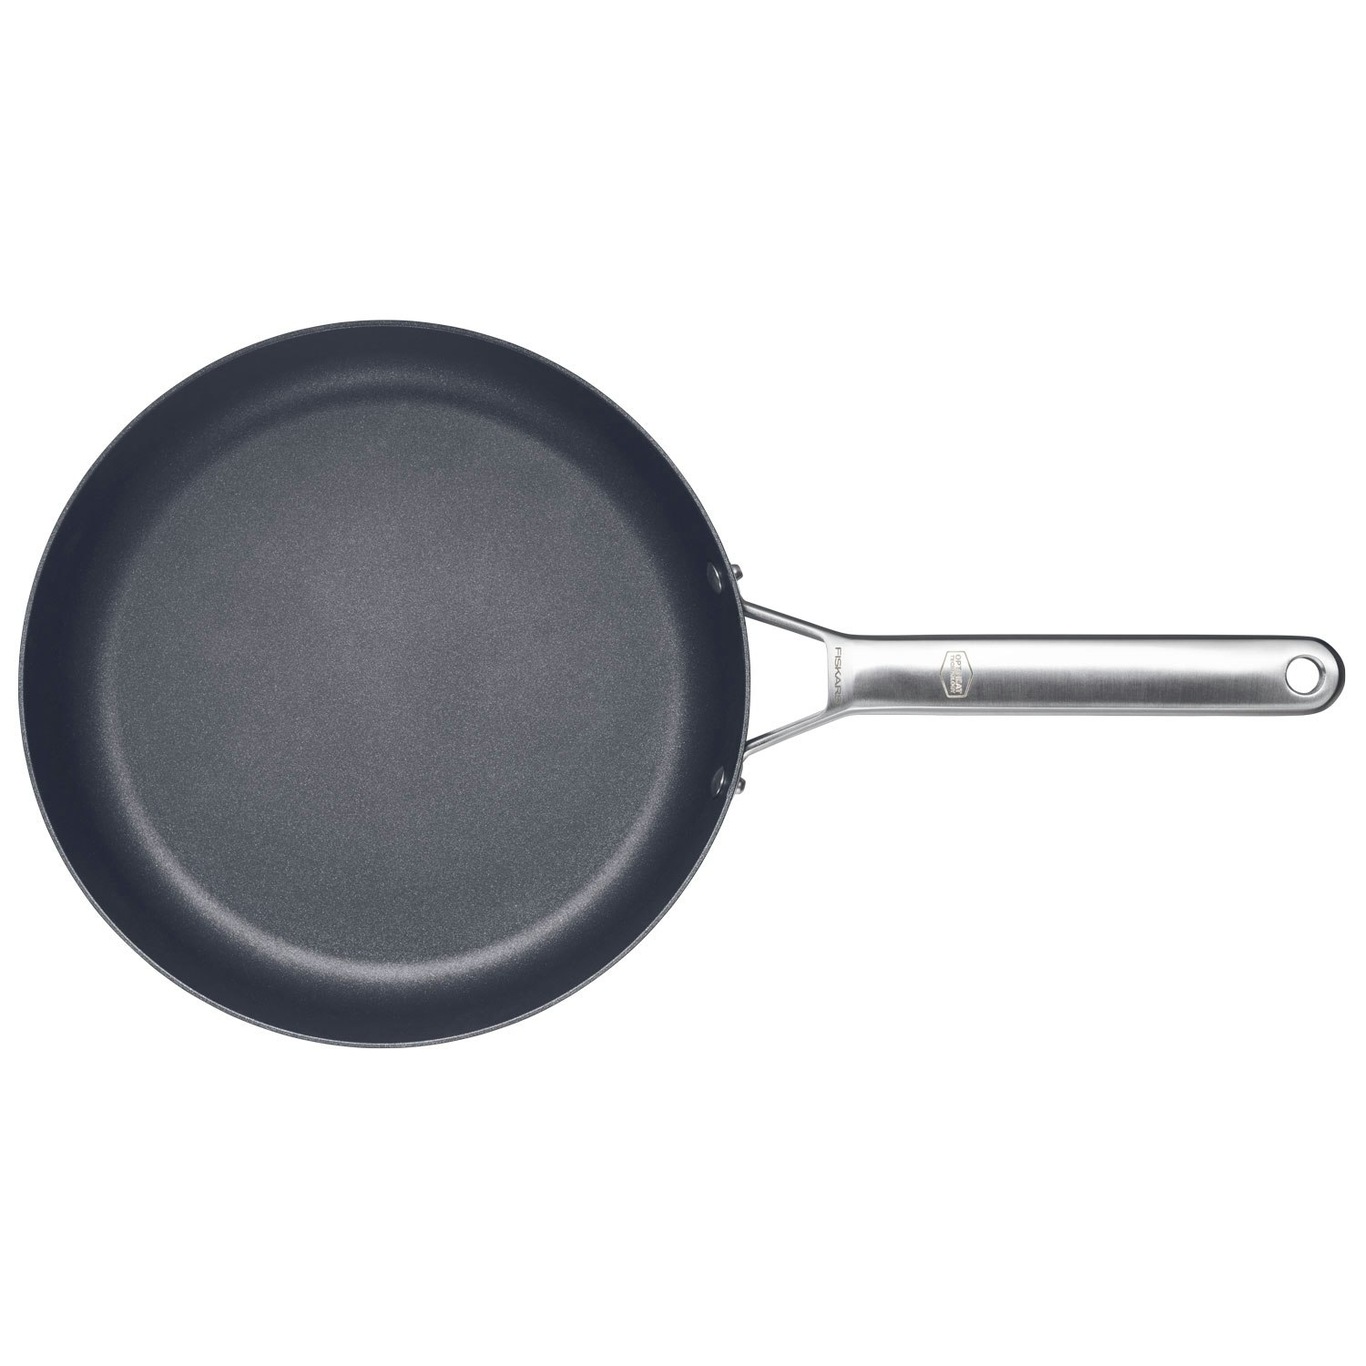 Taiten Frying Pan, 28 cm